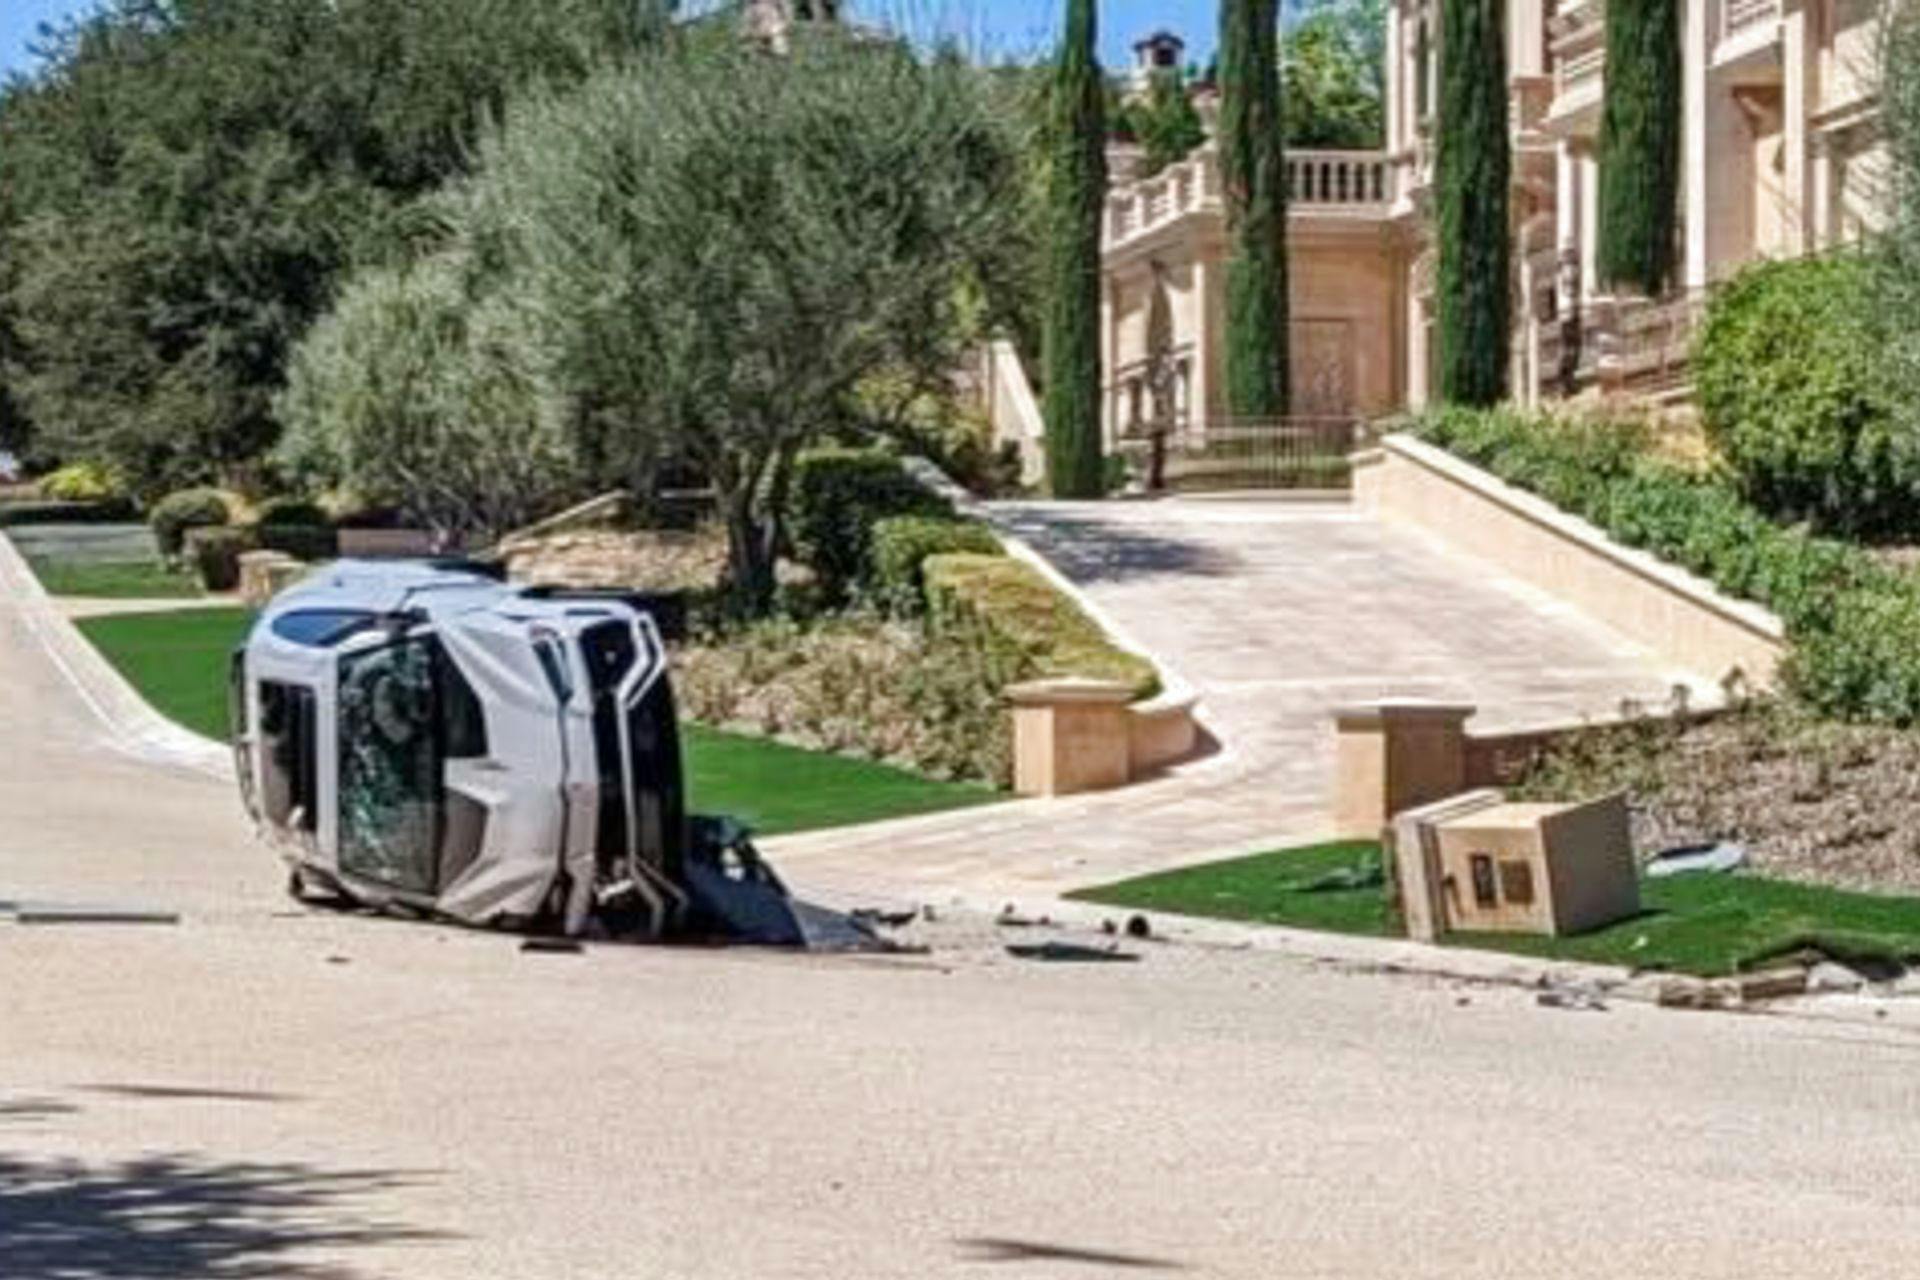 Lamborghinien efter ulykken.
